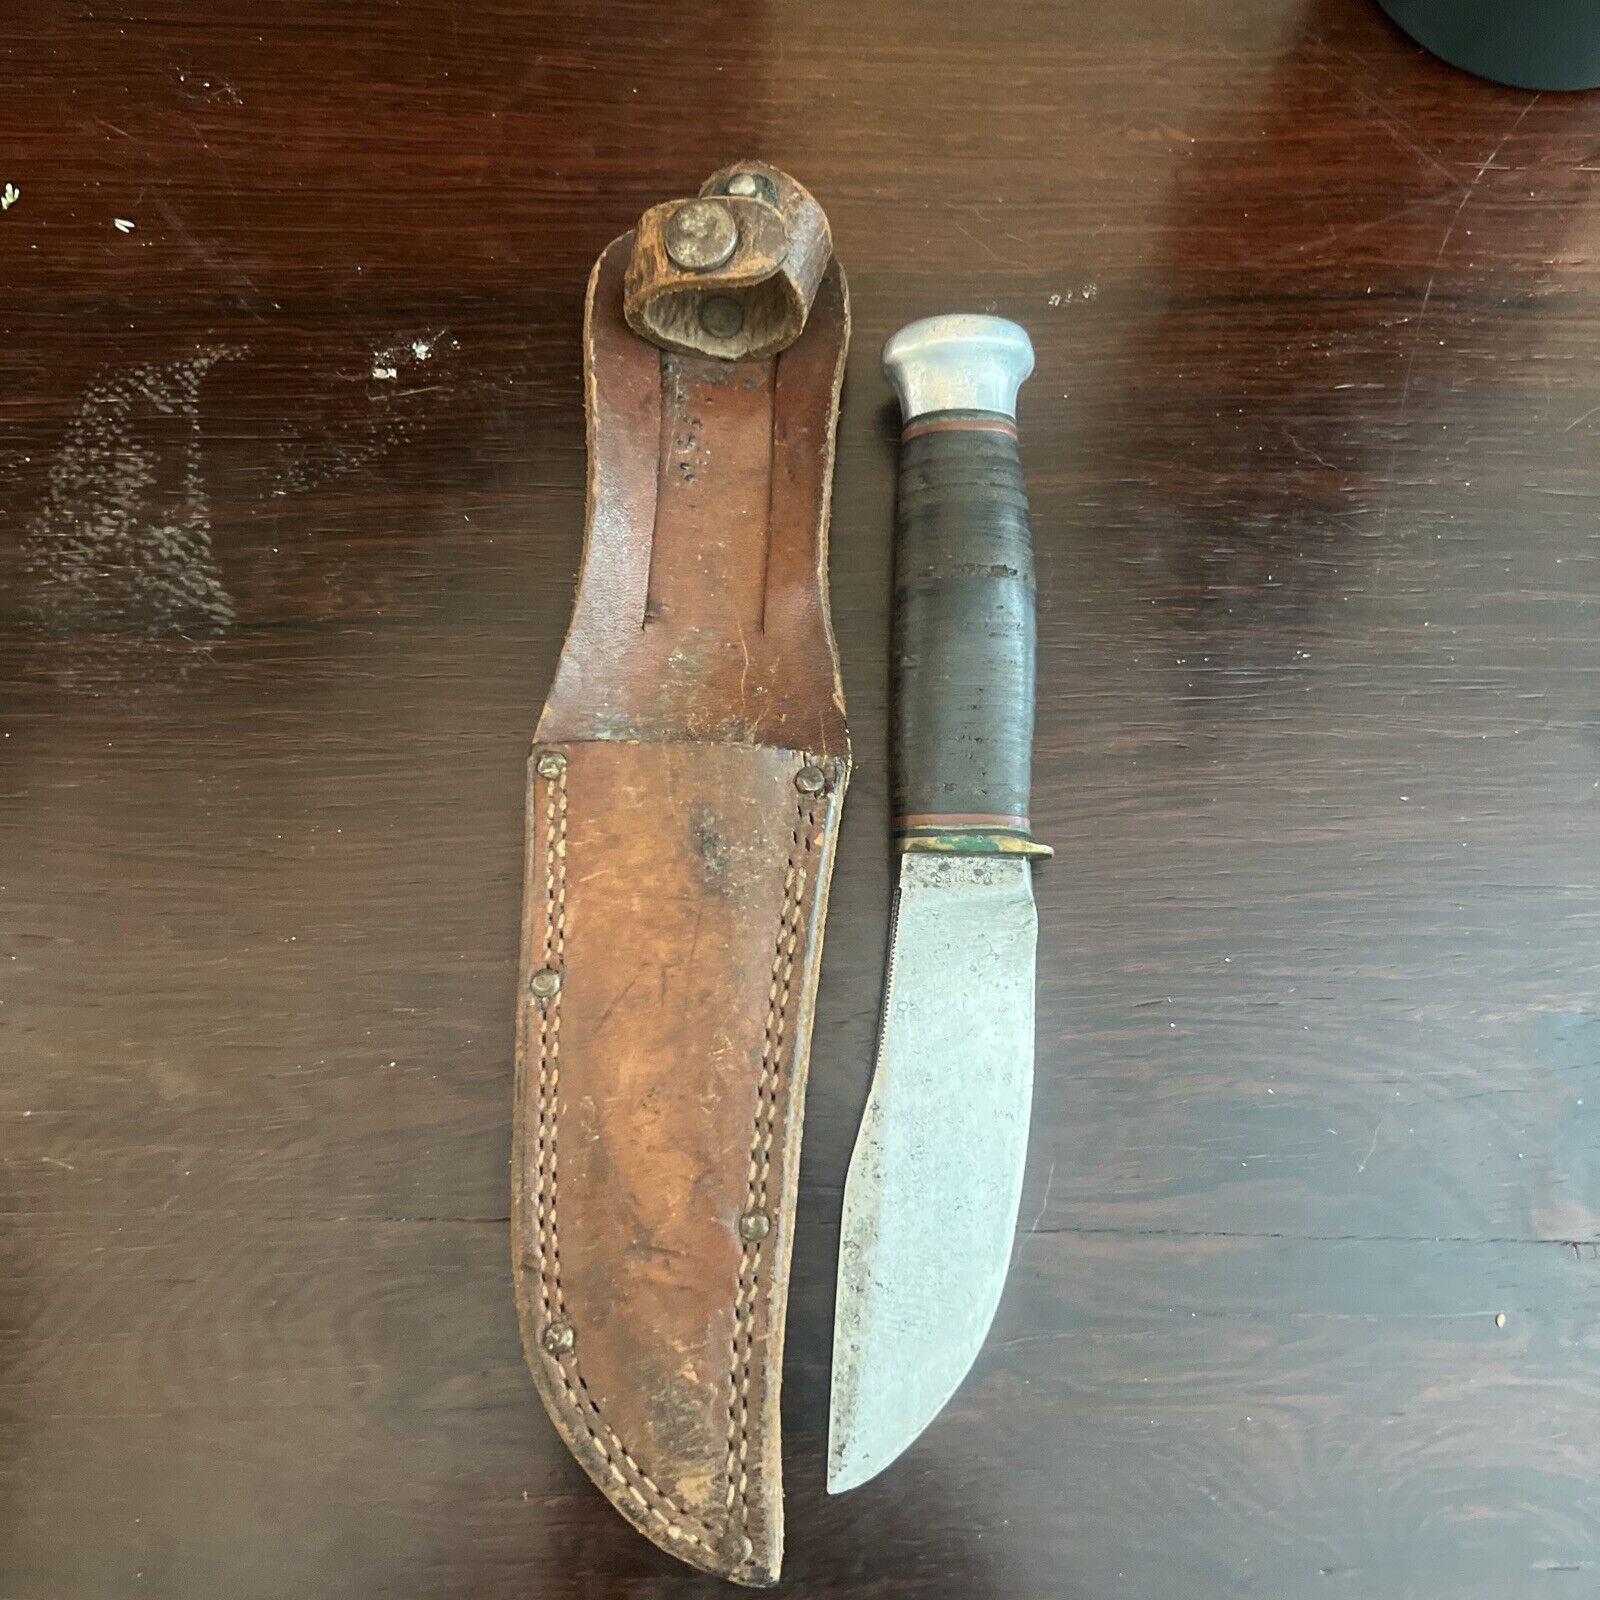 Marbles Gladstone Woodcraft Knife, 1920s with sheath. Beautiful